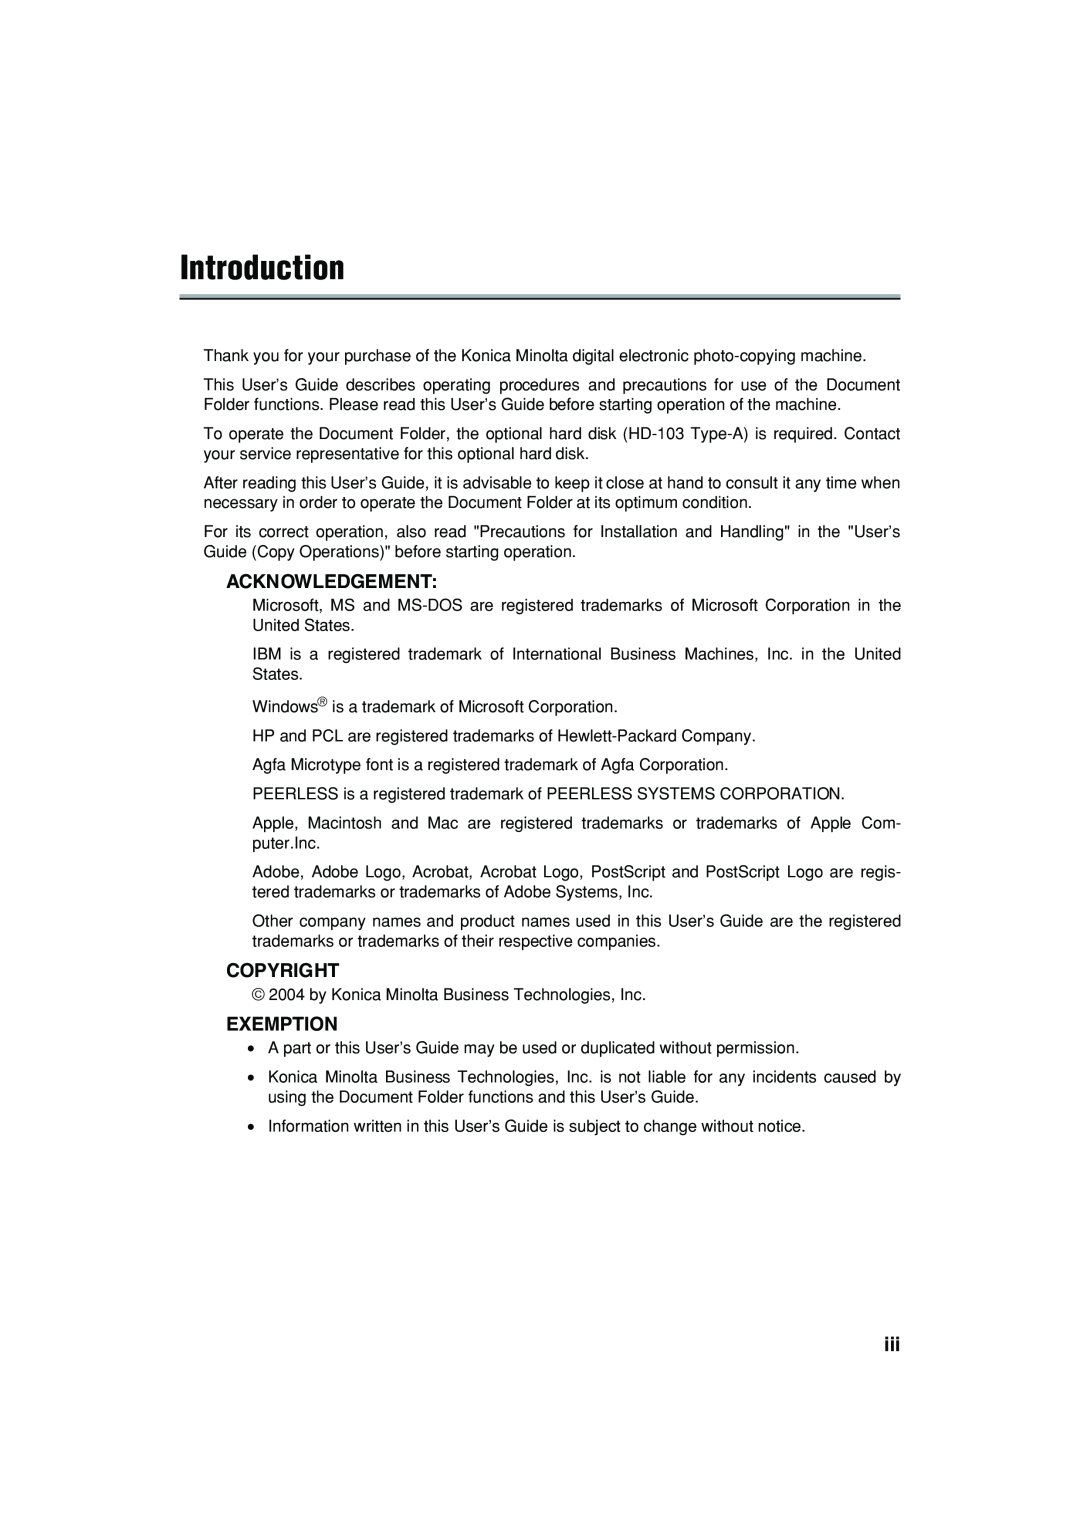 Konica Minolta 7222 manual Introduction, Acknowledgement, Copyright, Exemption 